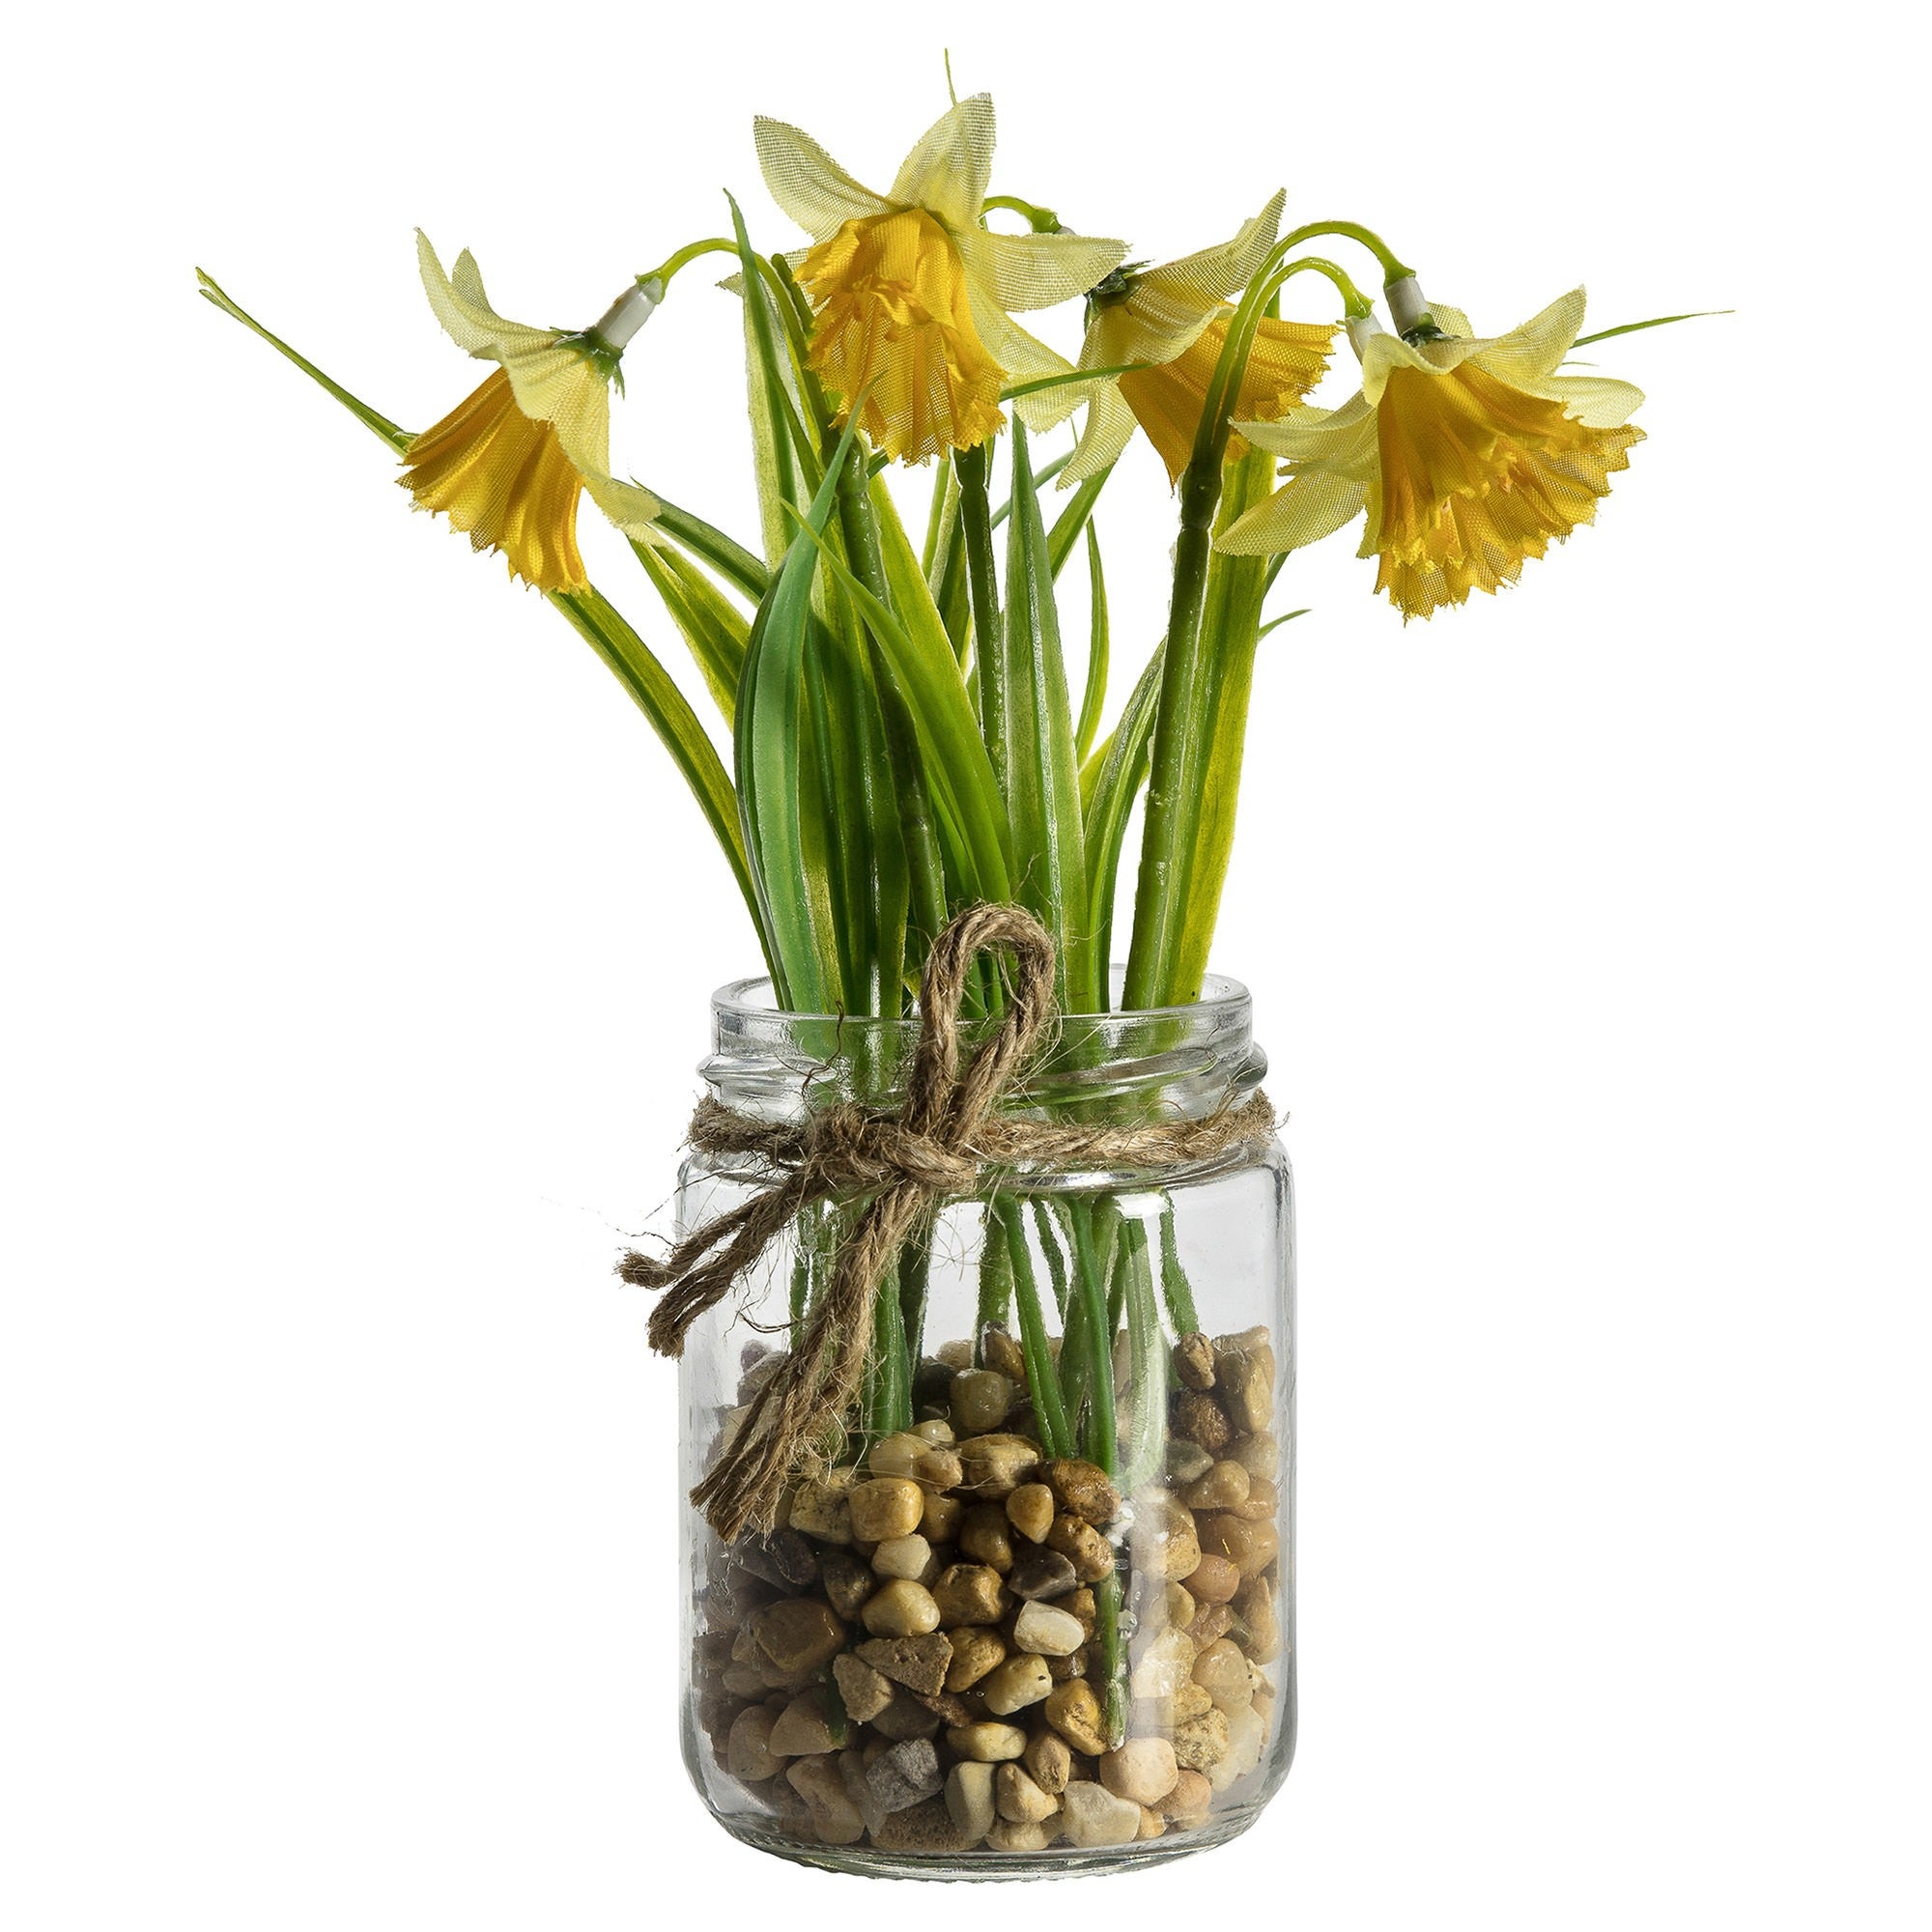 Shereford Artificial Daffodils in Glass Jar